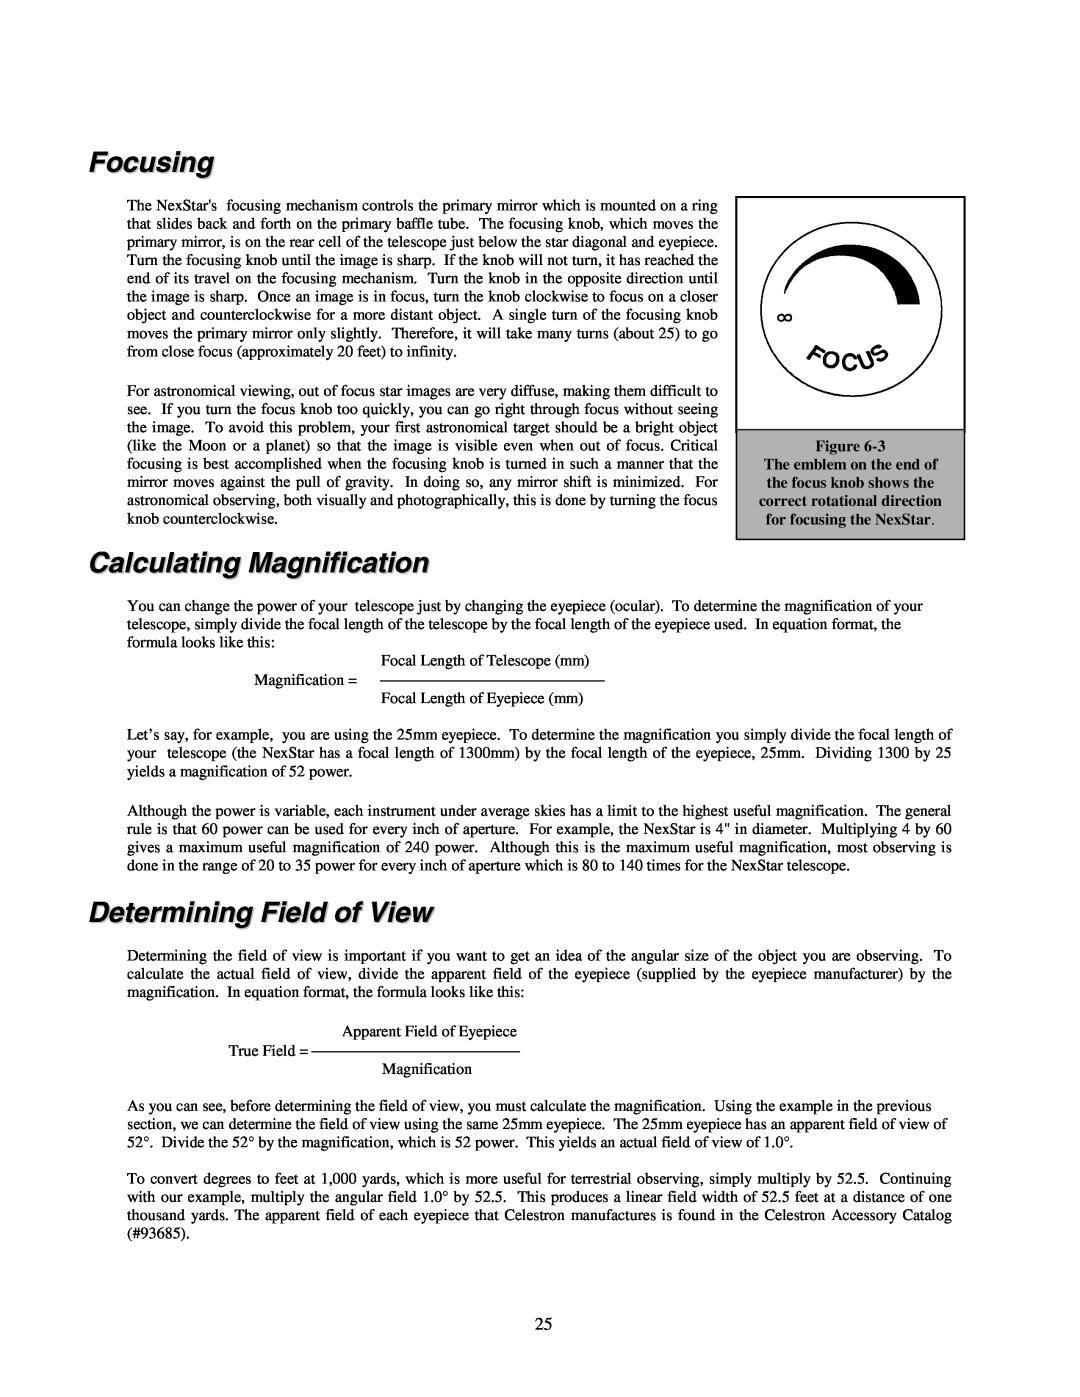 Celestron NexStar HC manual Focusing, Calculating Magnification, Determining Field of View, Figure 